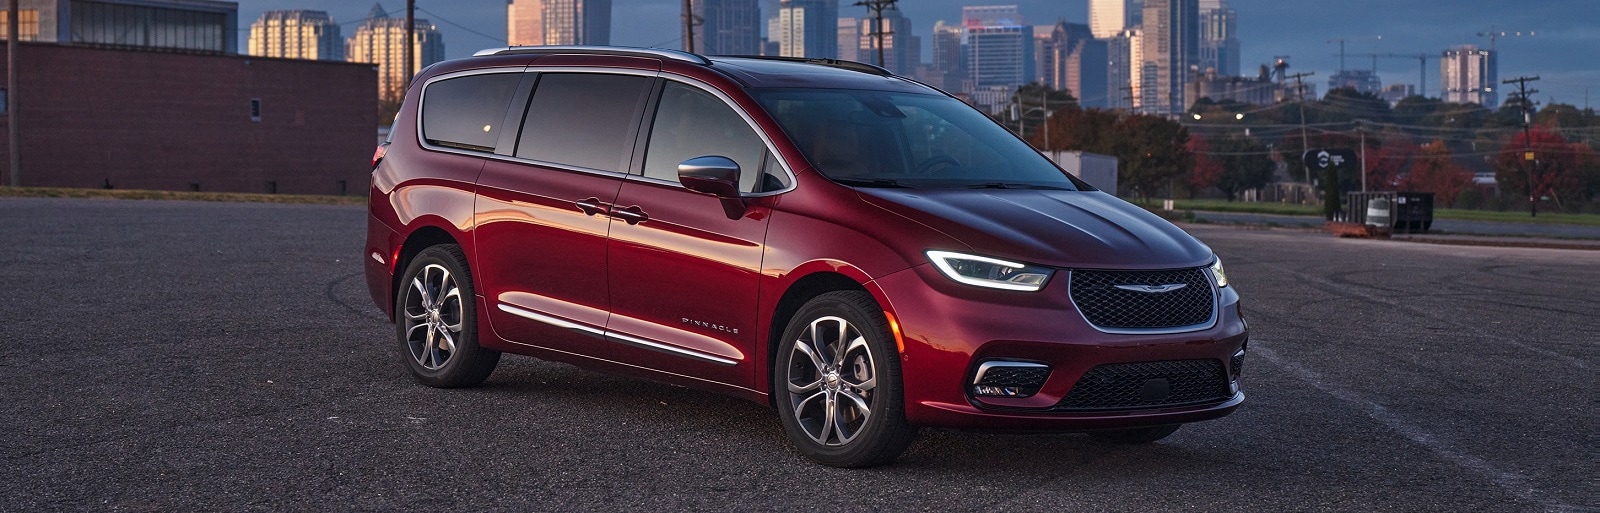 2022 Chrysler Pacifica Review - The Best Family Minivan